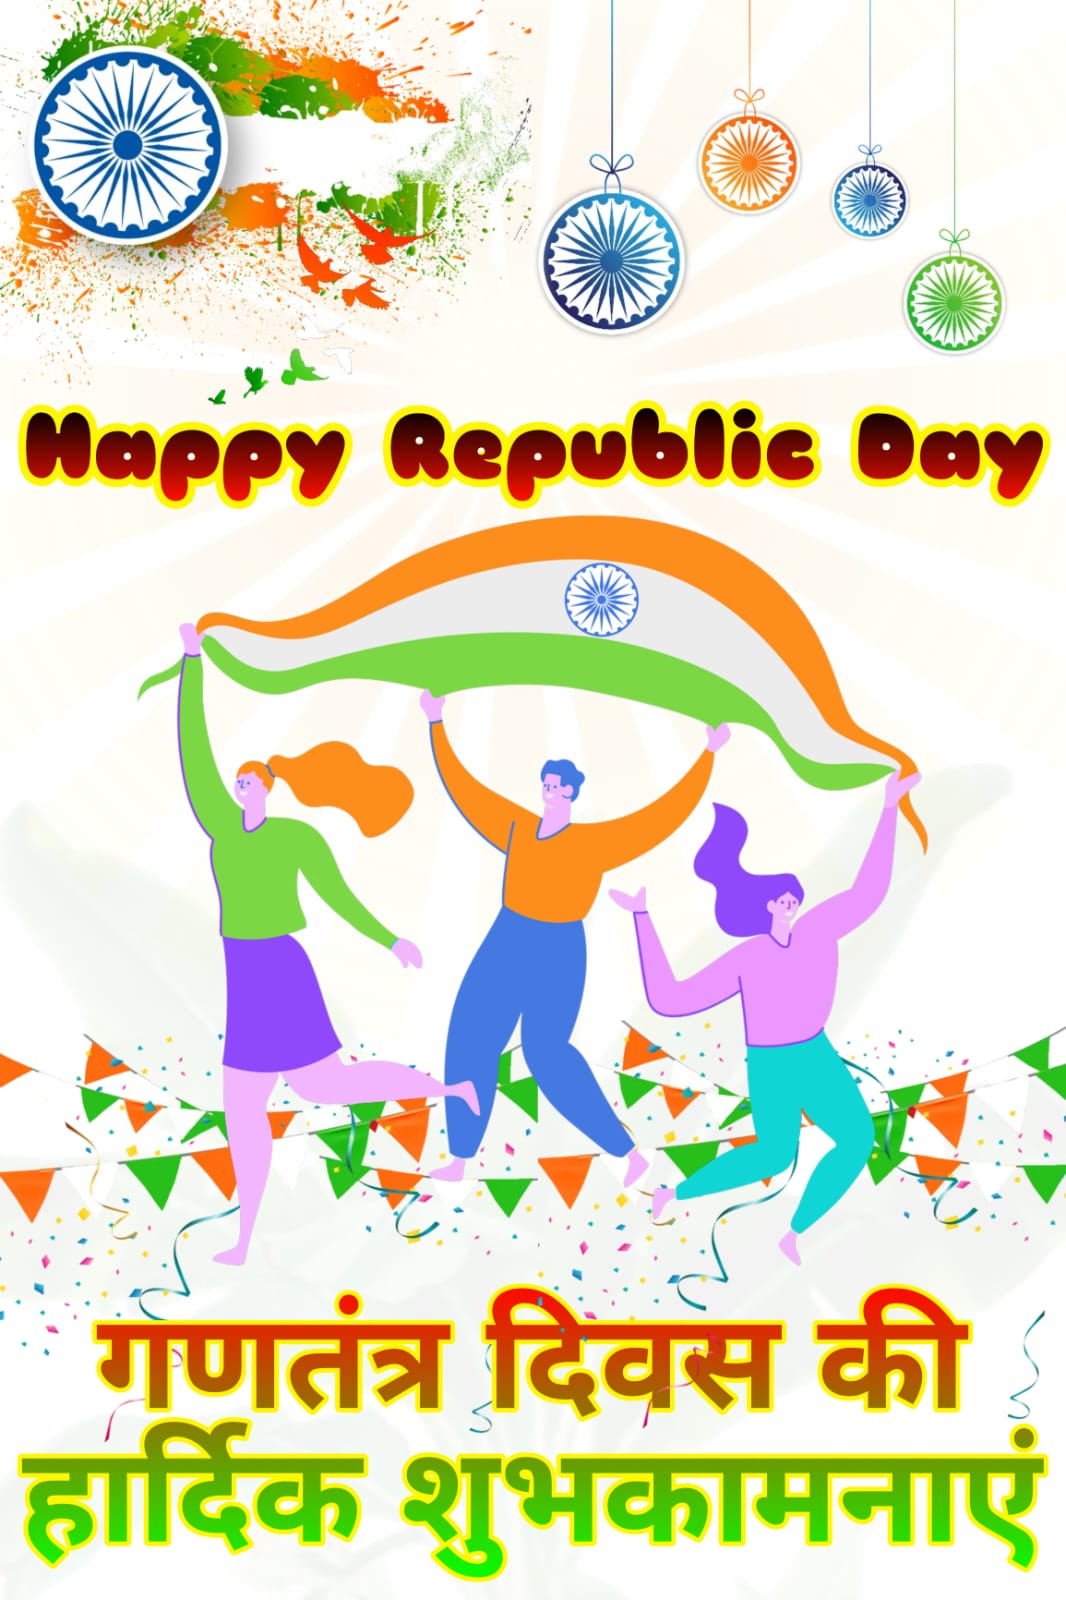 गणतंत्र दिवस की हार्दिक शुभकामनाएं | Gantantra Diwas ki Hardik Shubhkamnaye